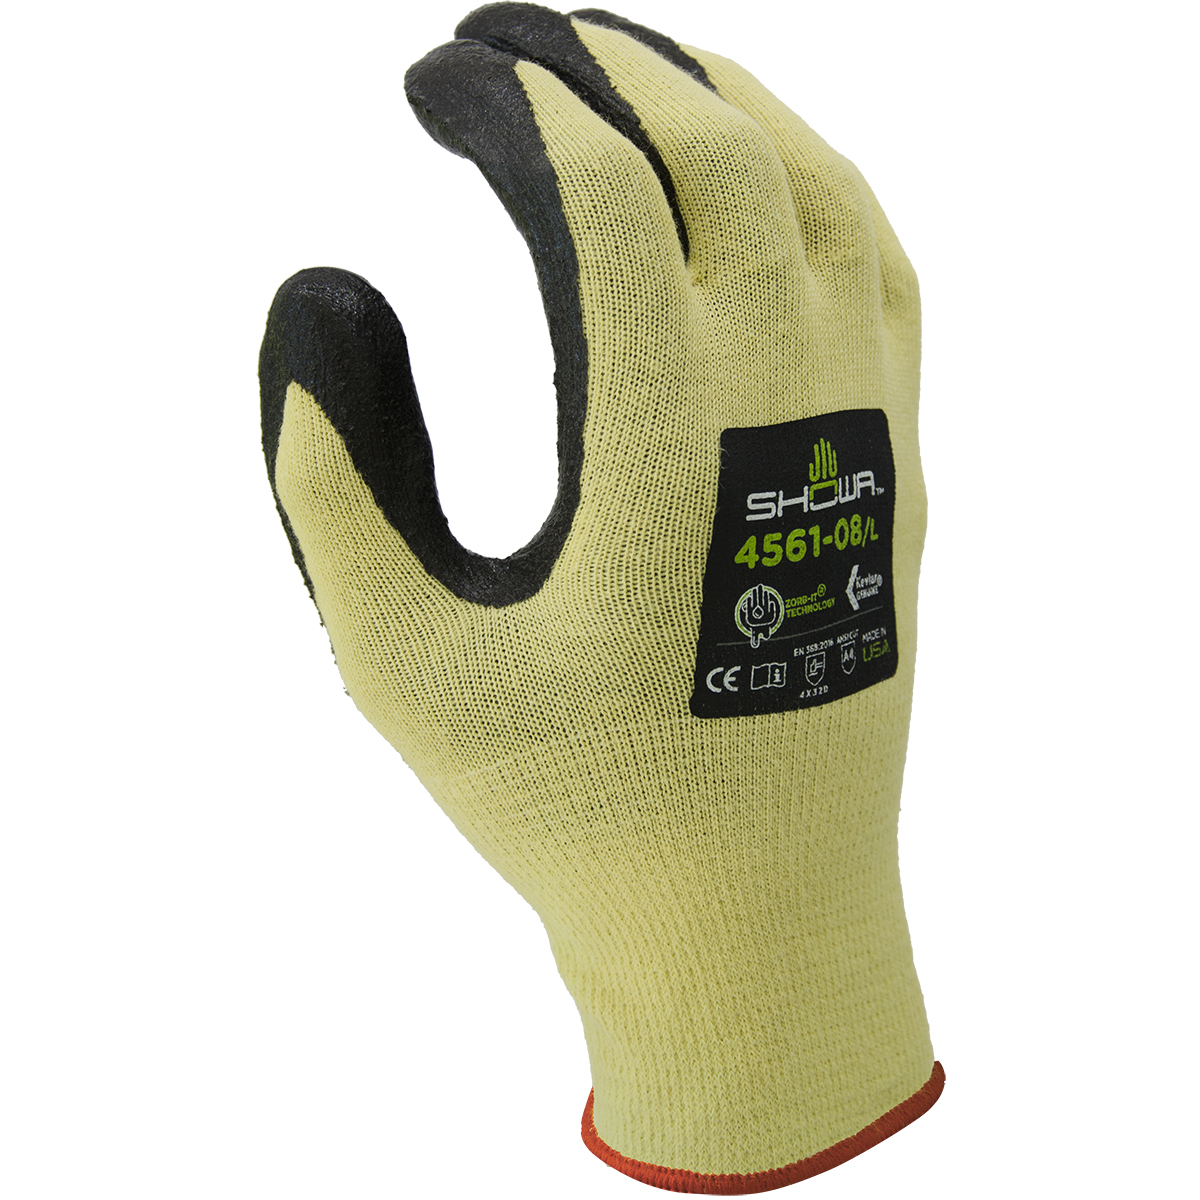 Cut resistant, sponge nitrile palm w/Zorb-IT technology, 15 gauge seamless knit made Kevlar®, yellow w/black dip,  ANSI CUT LEVEL A4/medium